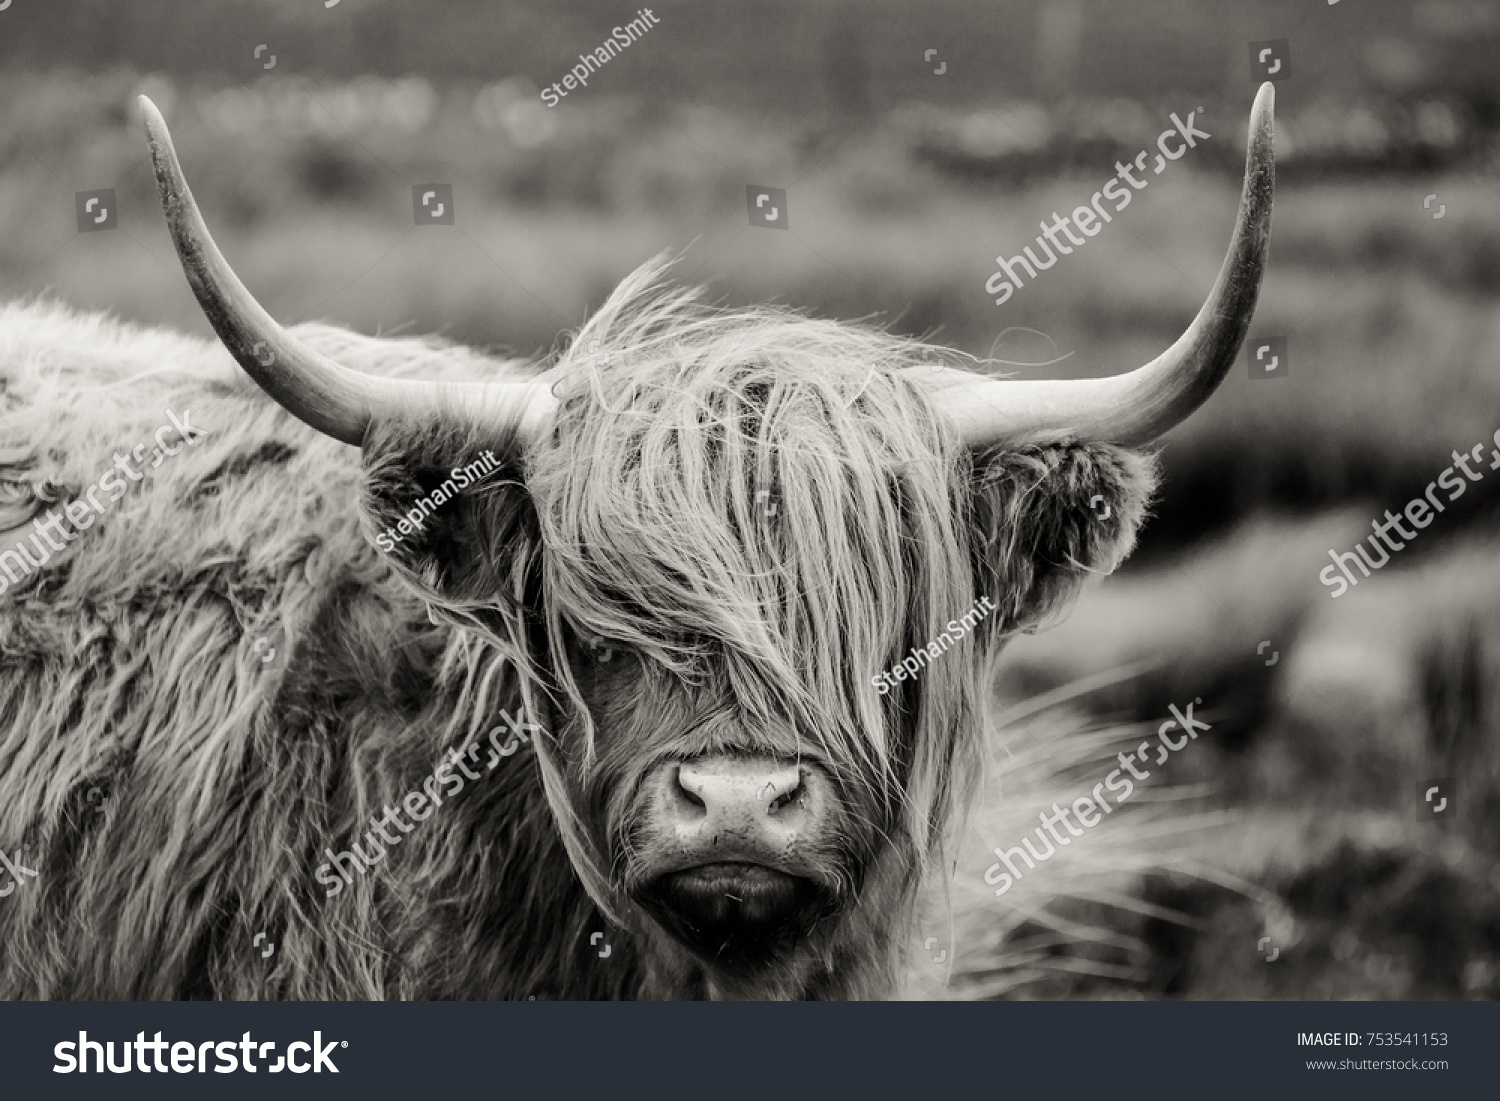 1,783 Black white highland cow Stock Photos, Images & Photography ...